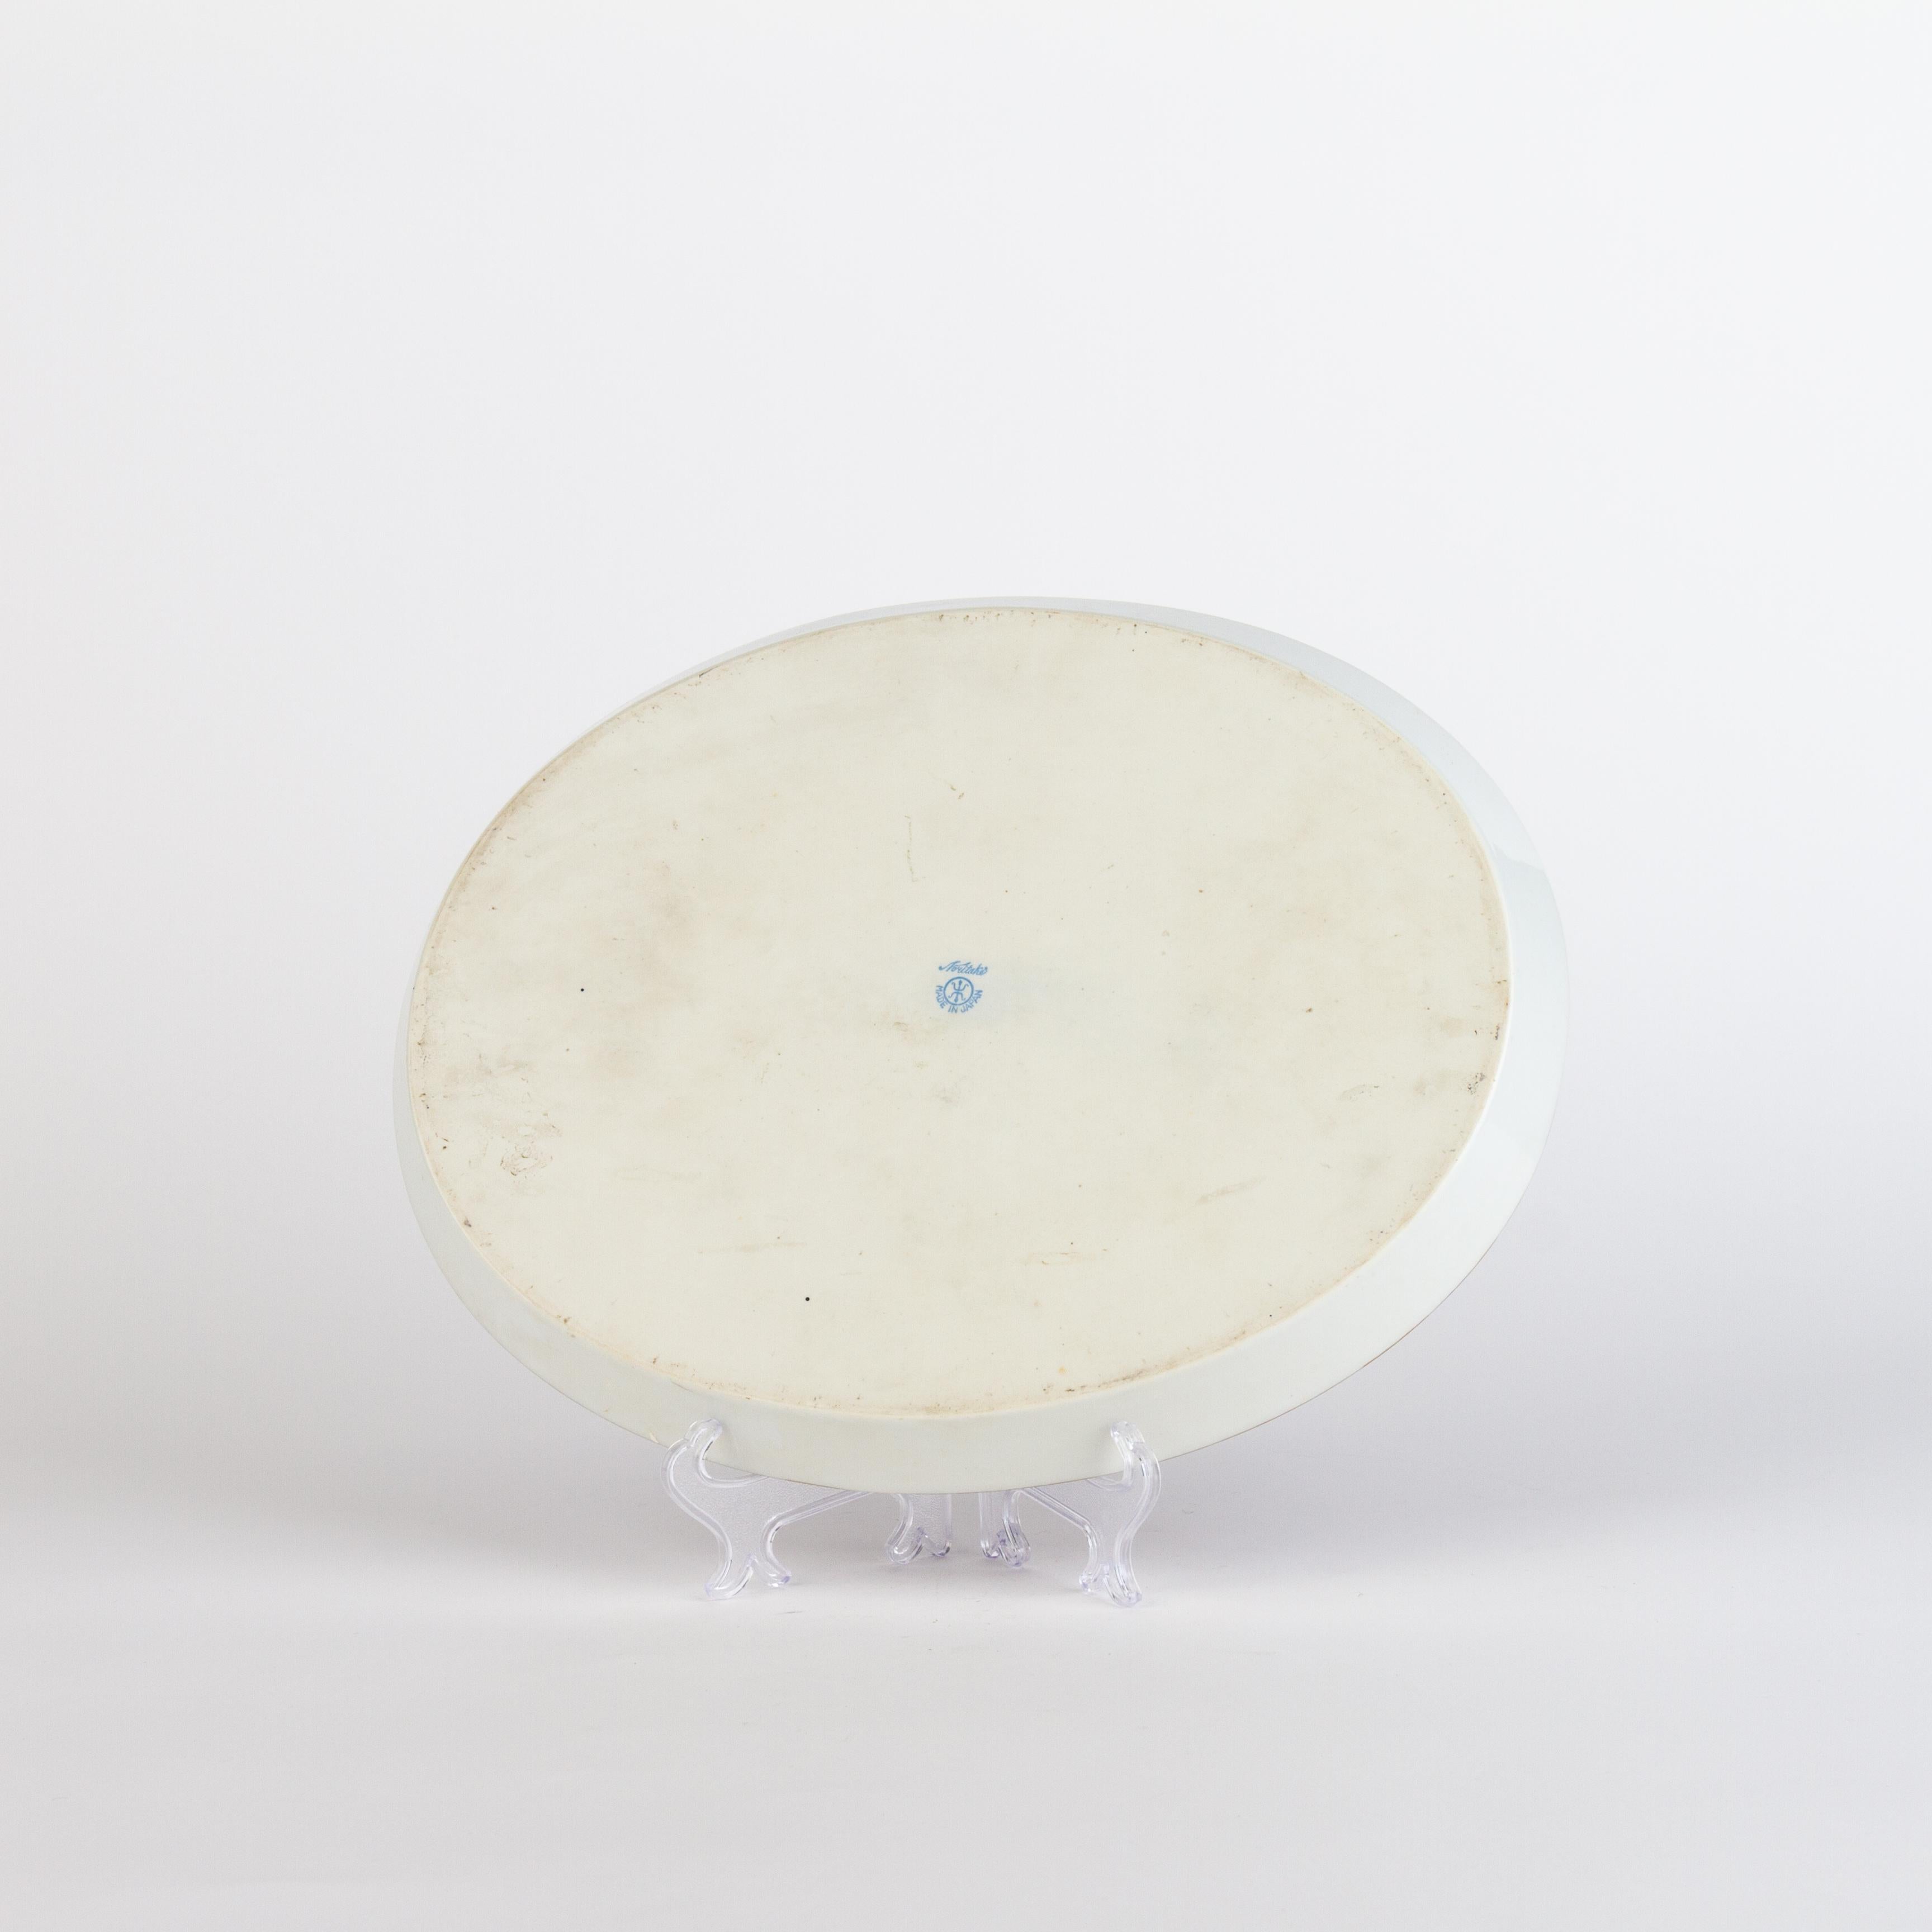 Noritake Japanese Art Deco Porcelain Oval Tray Plate For Sale 2